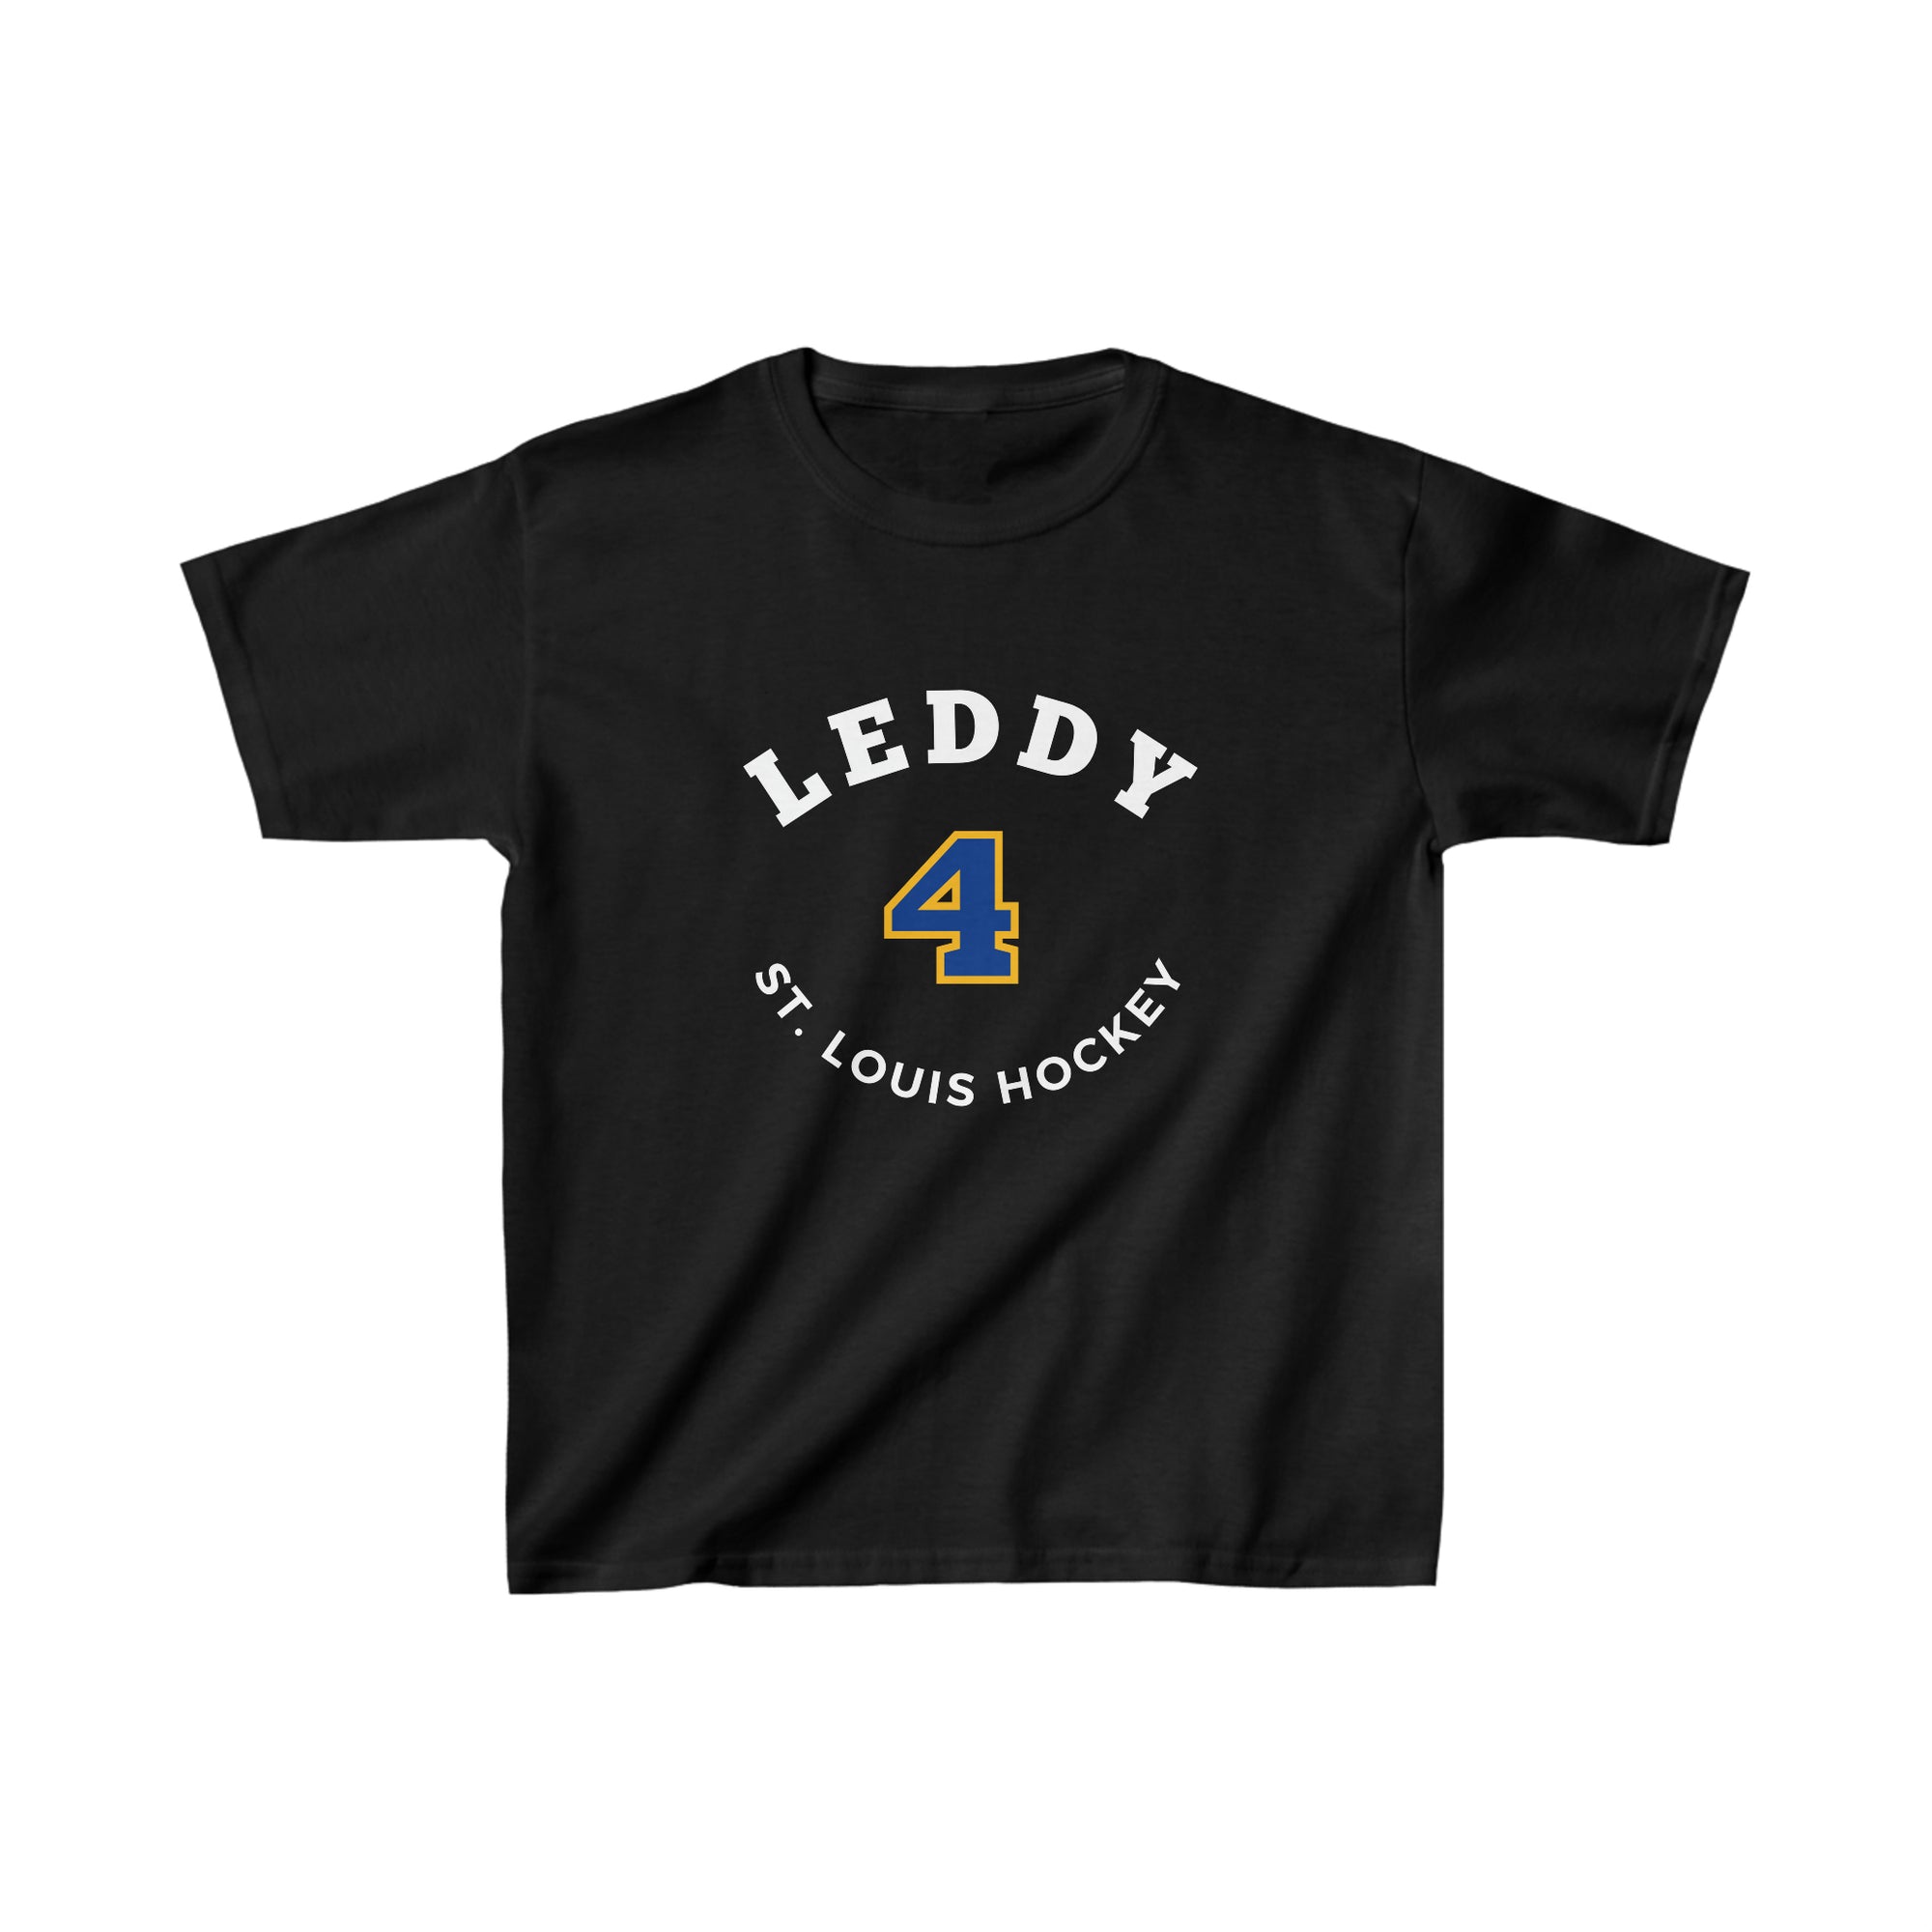 Leddy 4 St. Louis Hockey Number Arch Design Kids Tee